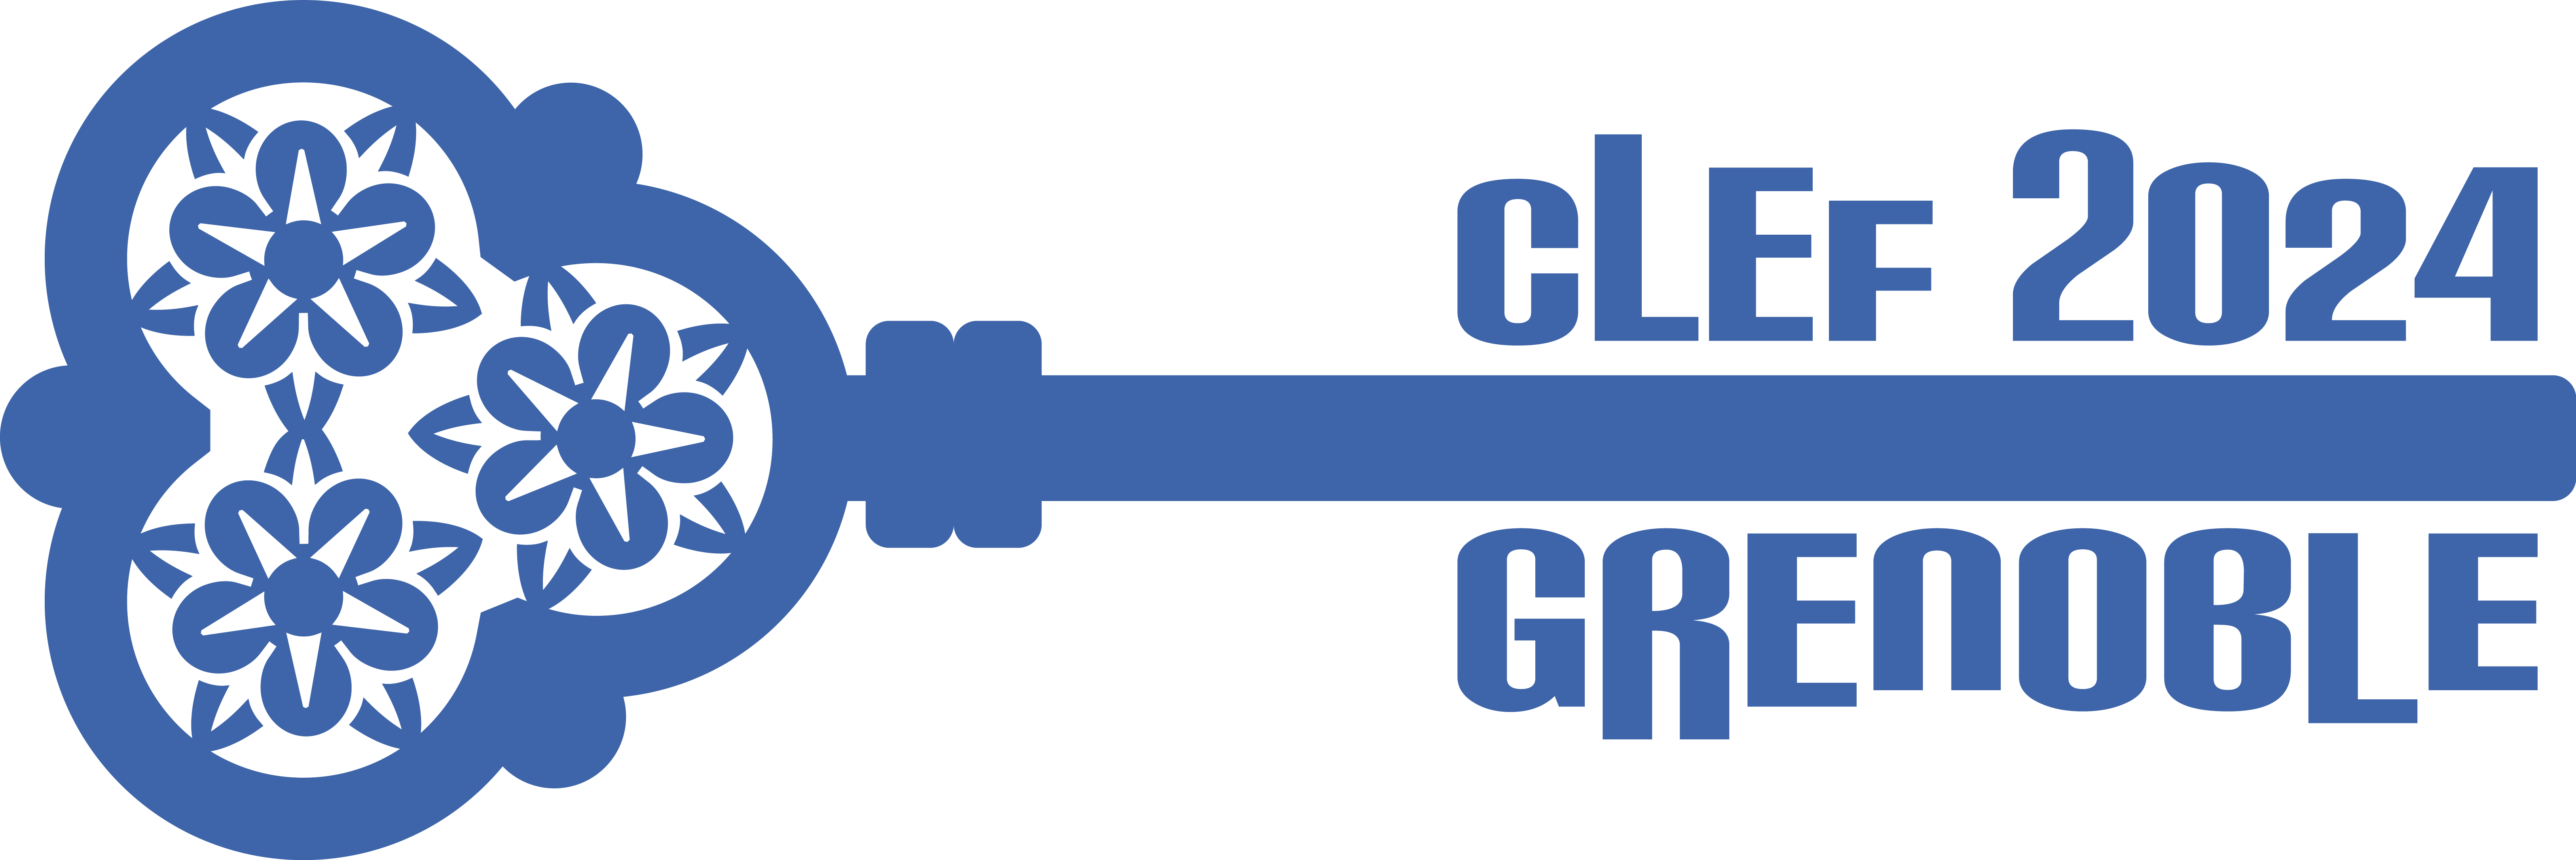 CLEF Grenoble 2024 logo